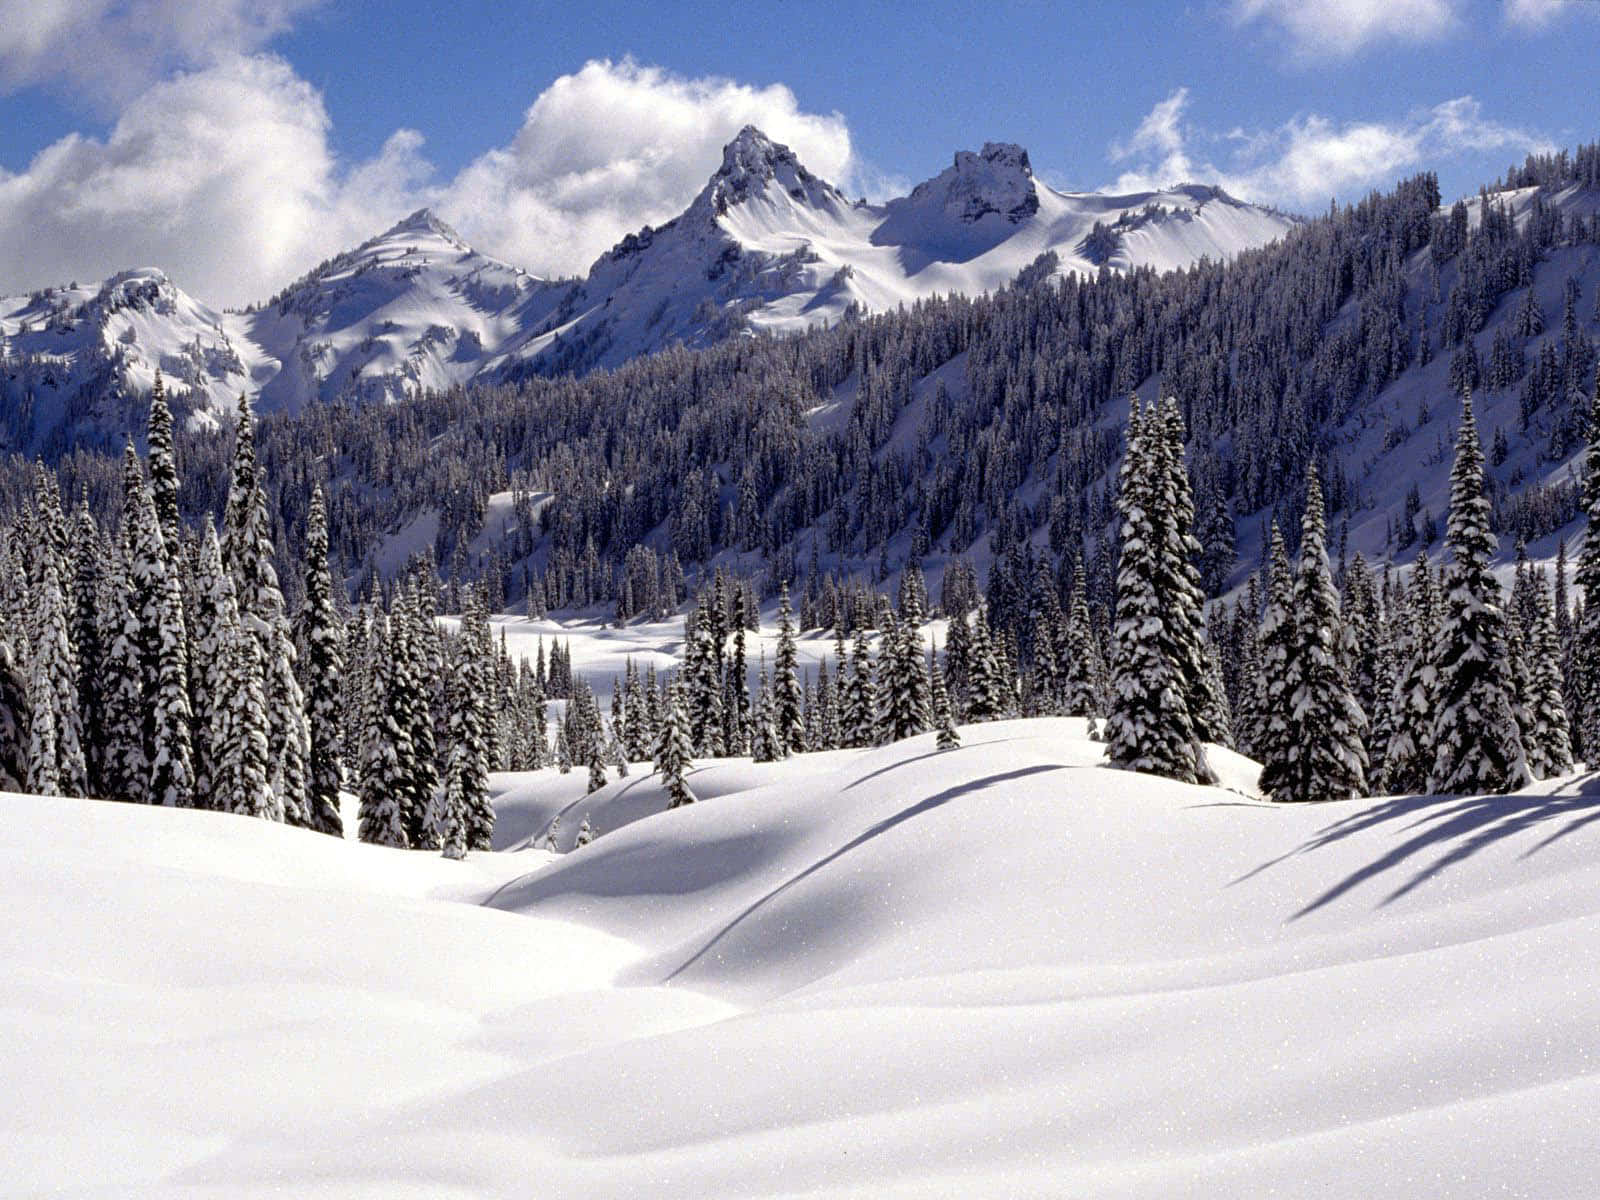 Tómateun Momento Para Disfrutar Del Maravilloso Paisaje Invernal Nevado.